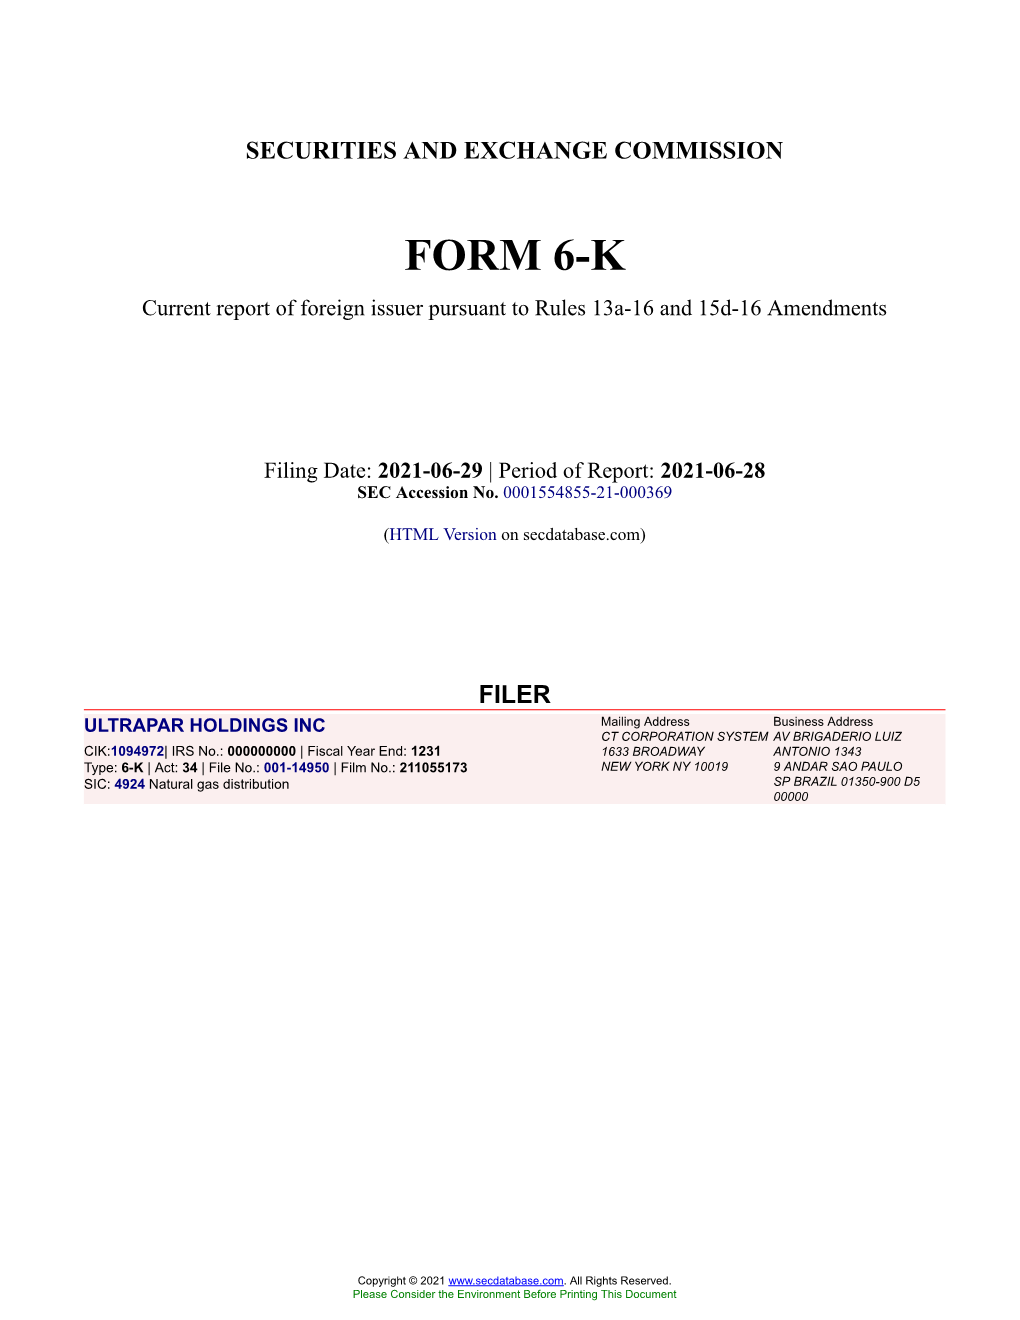 ULTRAPAR HOLDINGS INC Form 6-K Current Event Report Filed